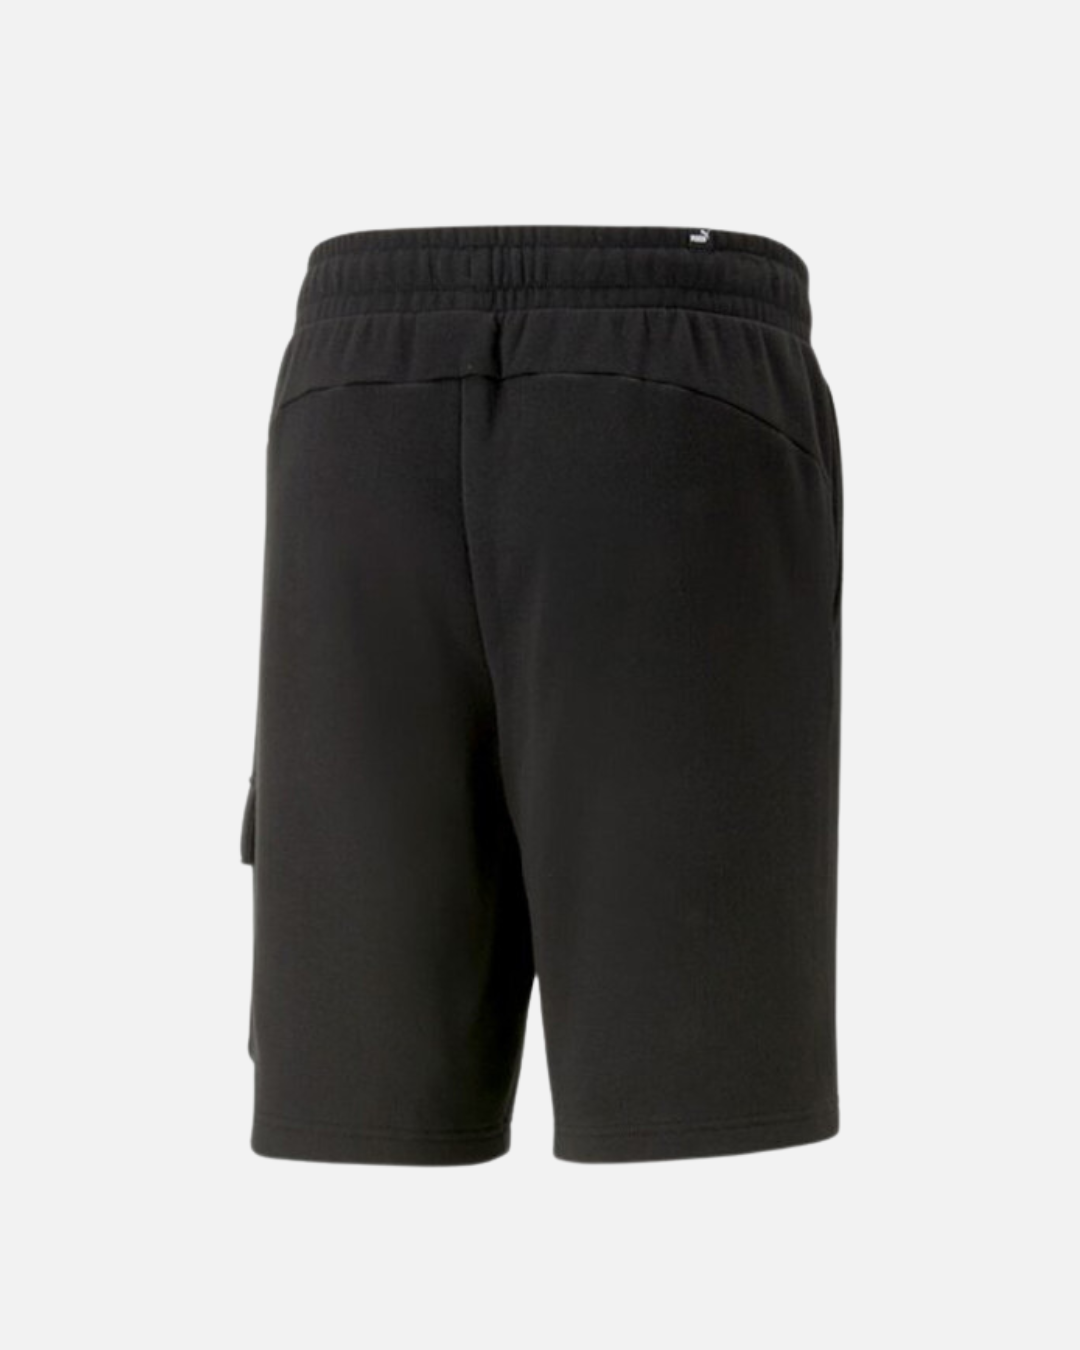 Puma Essentials Cargo Shorts - Black/White